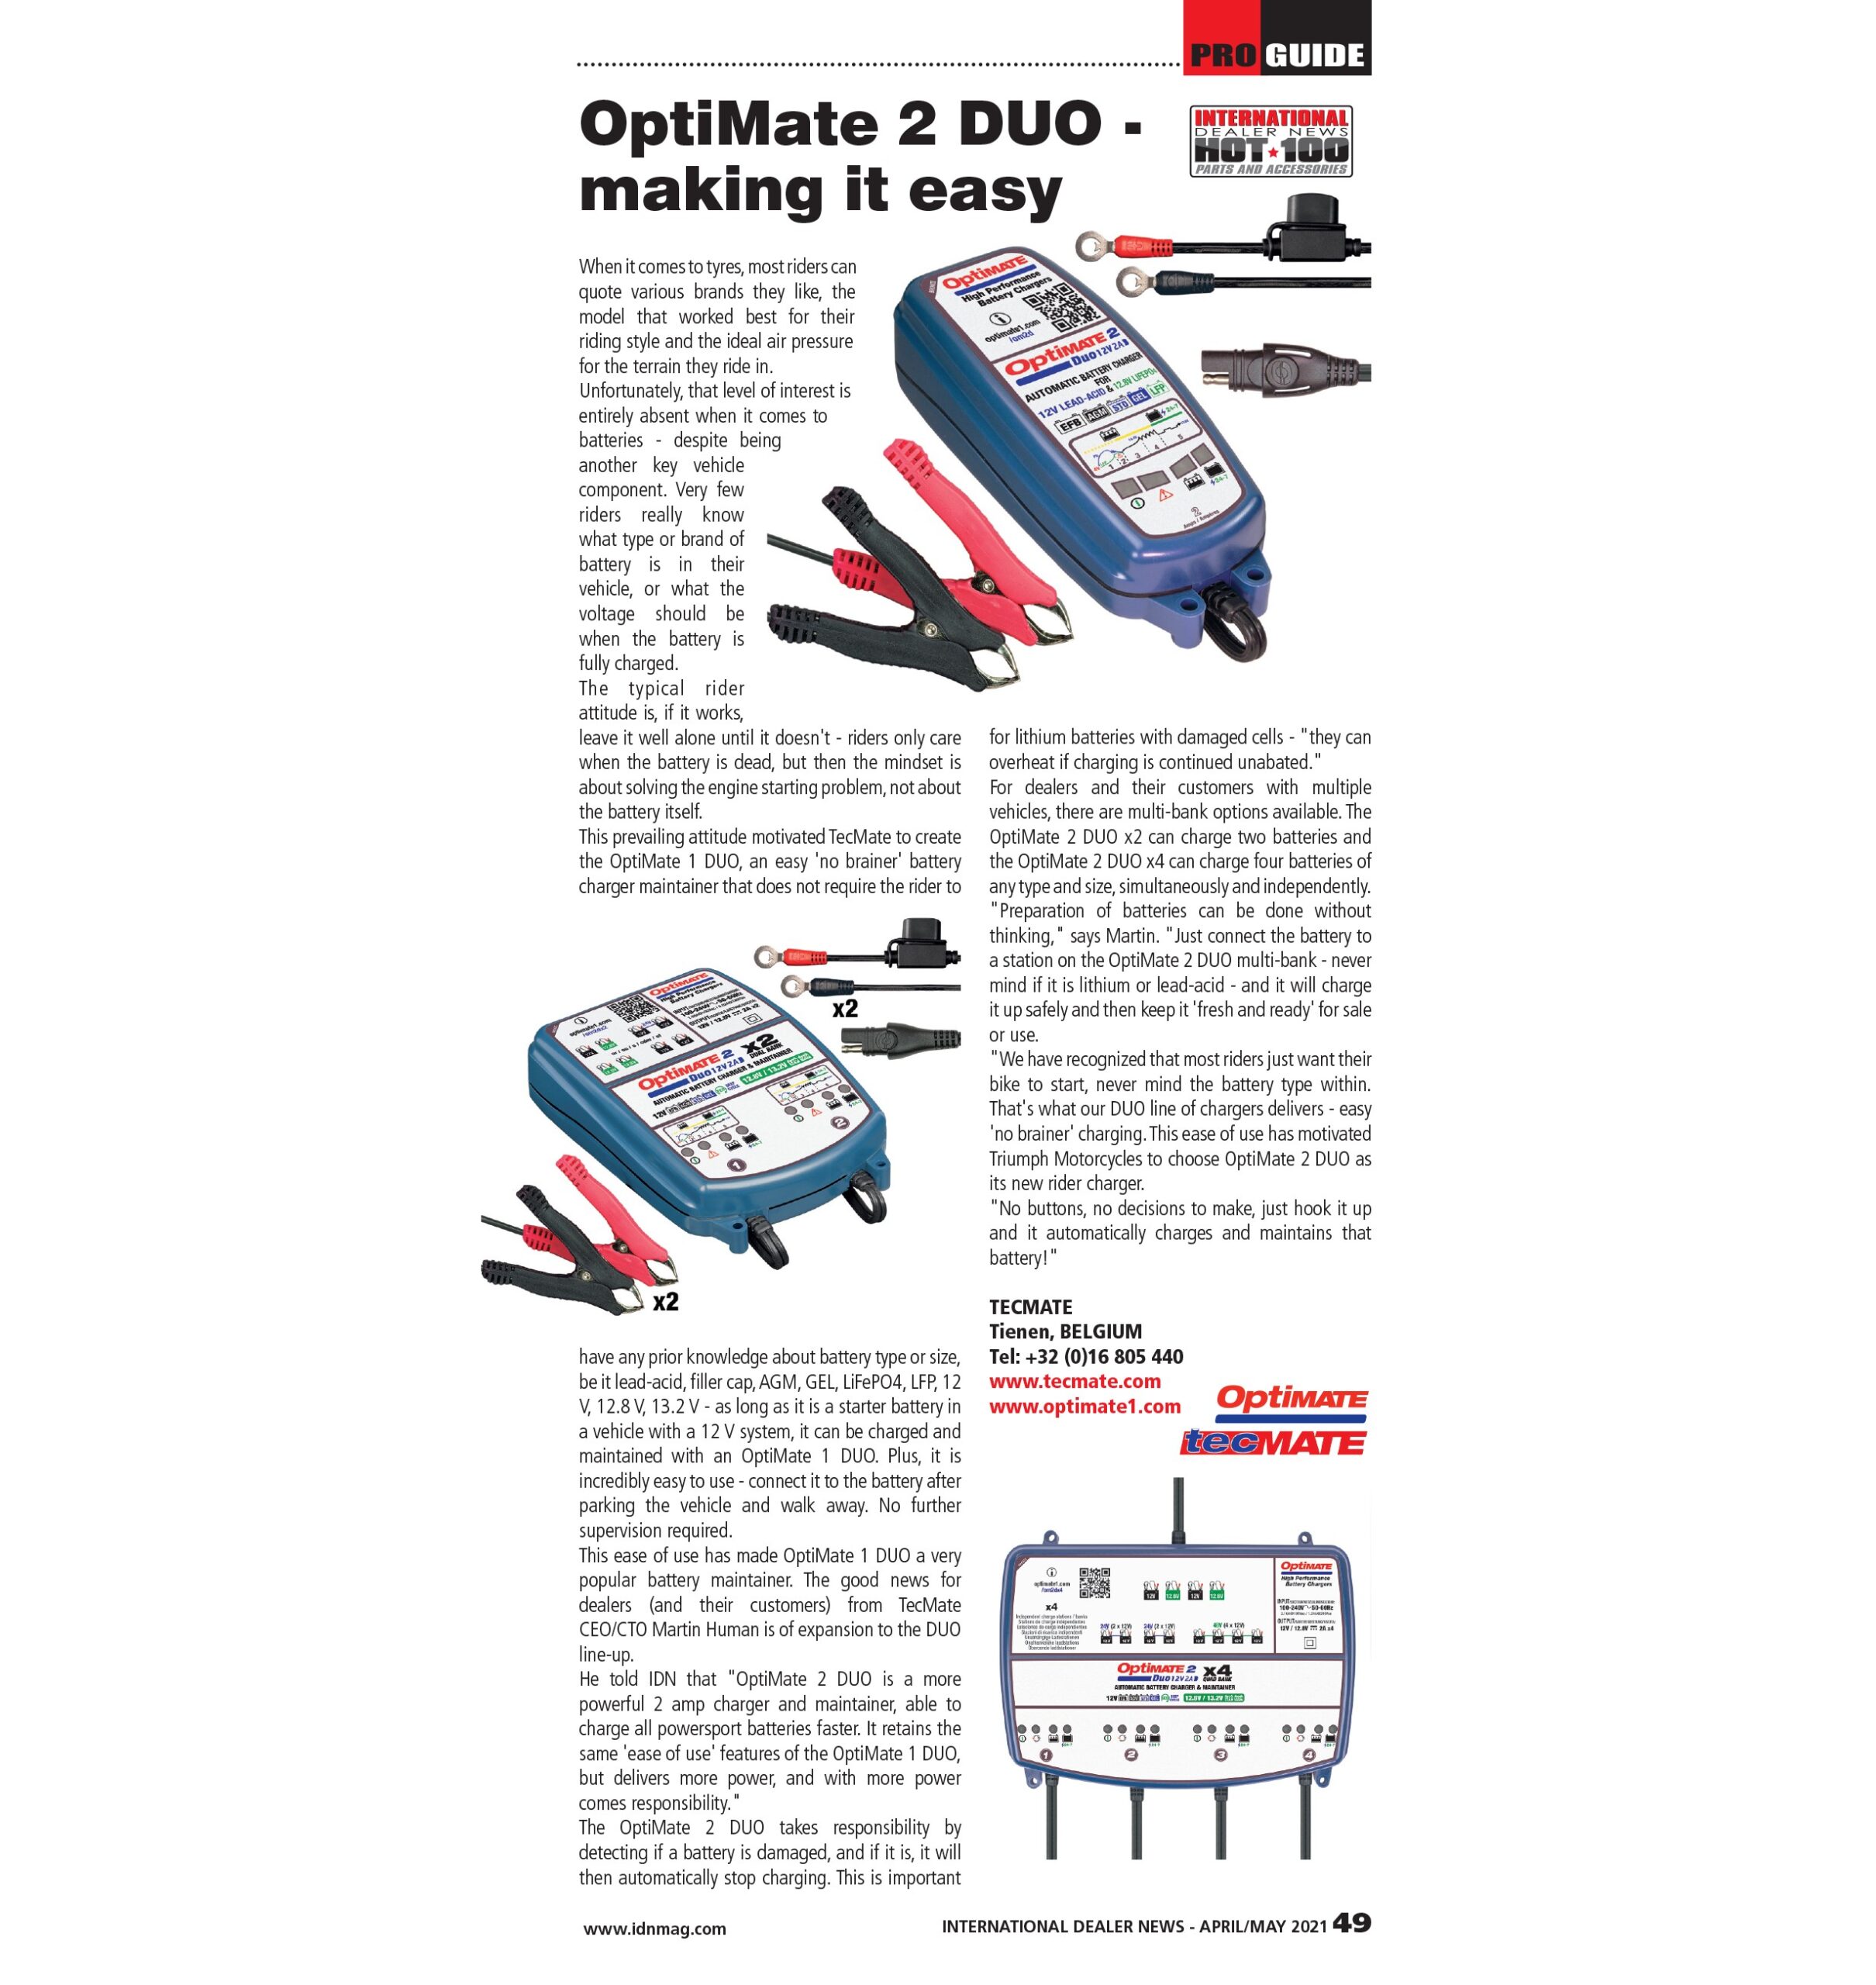 Artikel over de OptiMate 2 DUO acculader